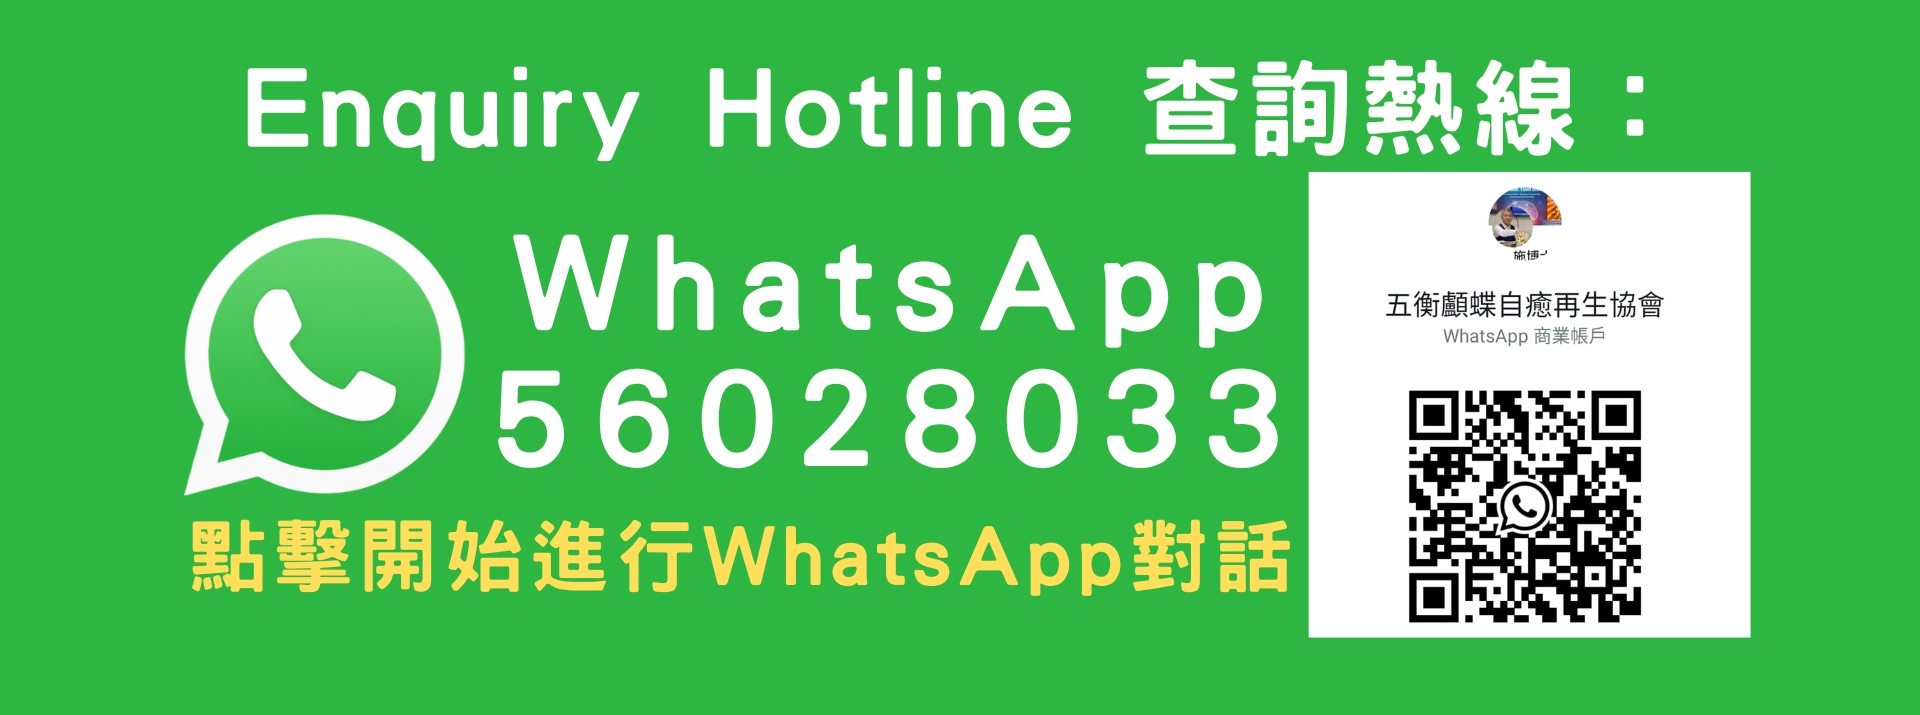 Enquiry Hotline WhatsApp 56028033